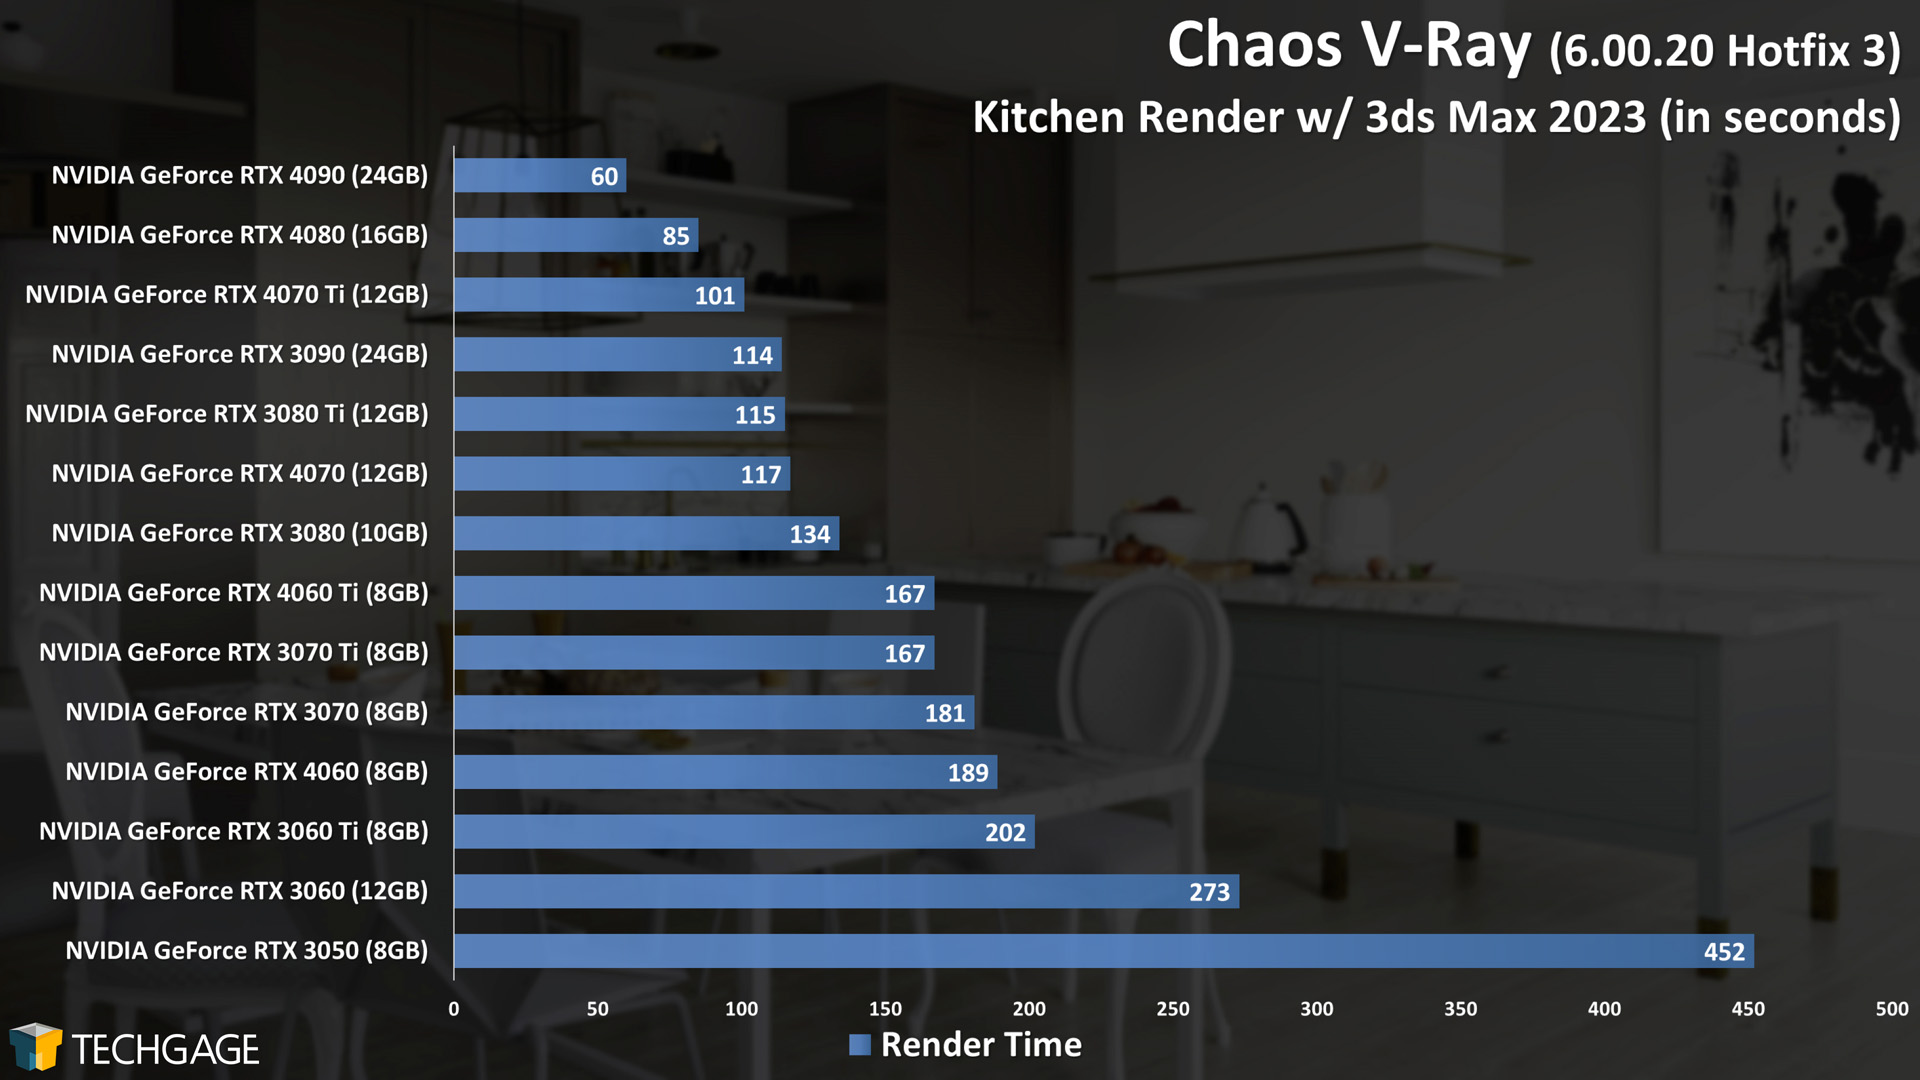 Chaos V-Ray - GPU Rendering Performance (Kitchen)